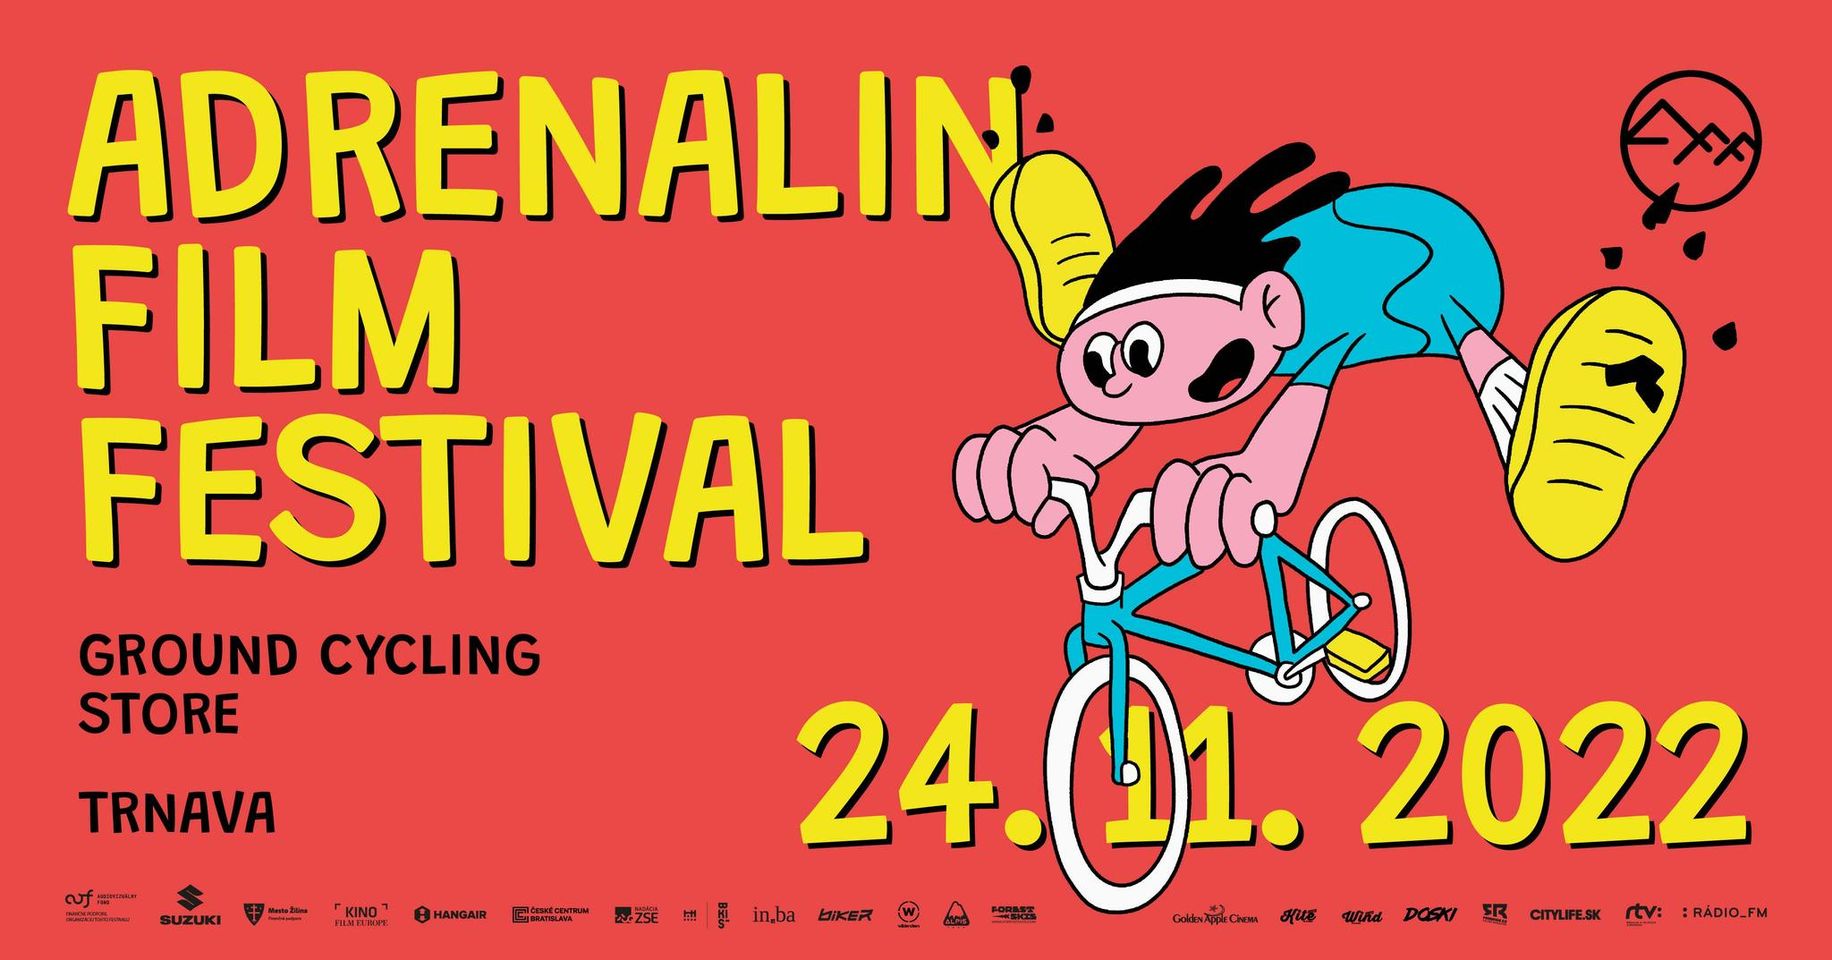 Adrenalin Film Festival 2022 / Trnava Ground Cycling Store Trnava